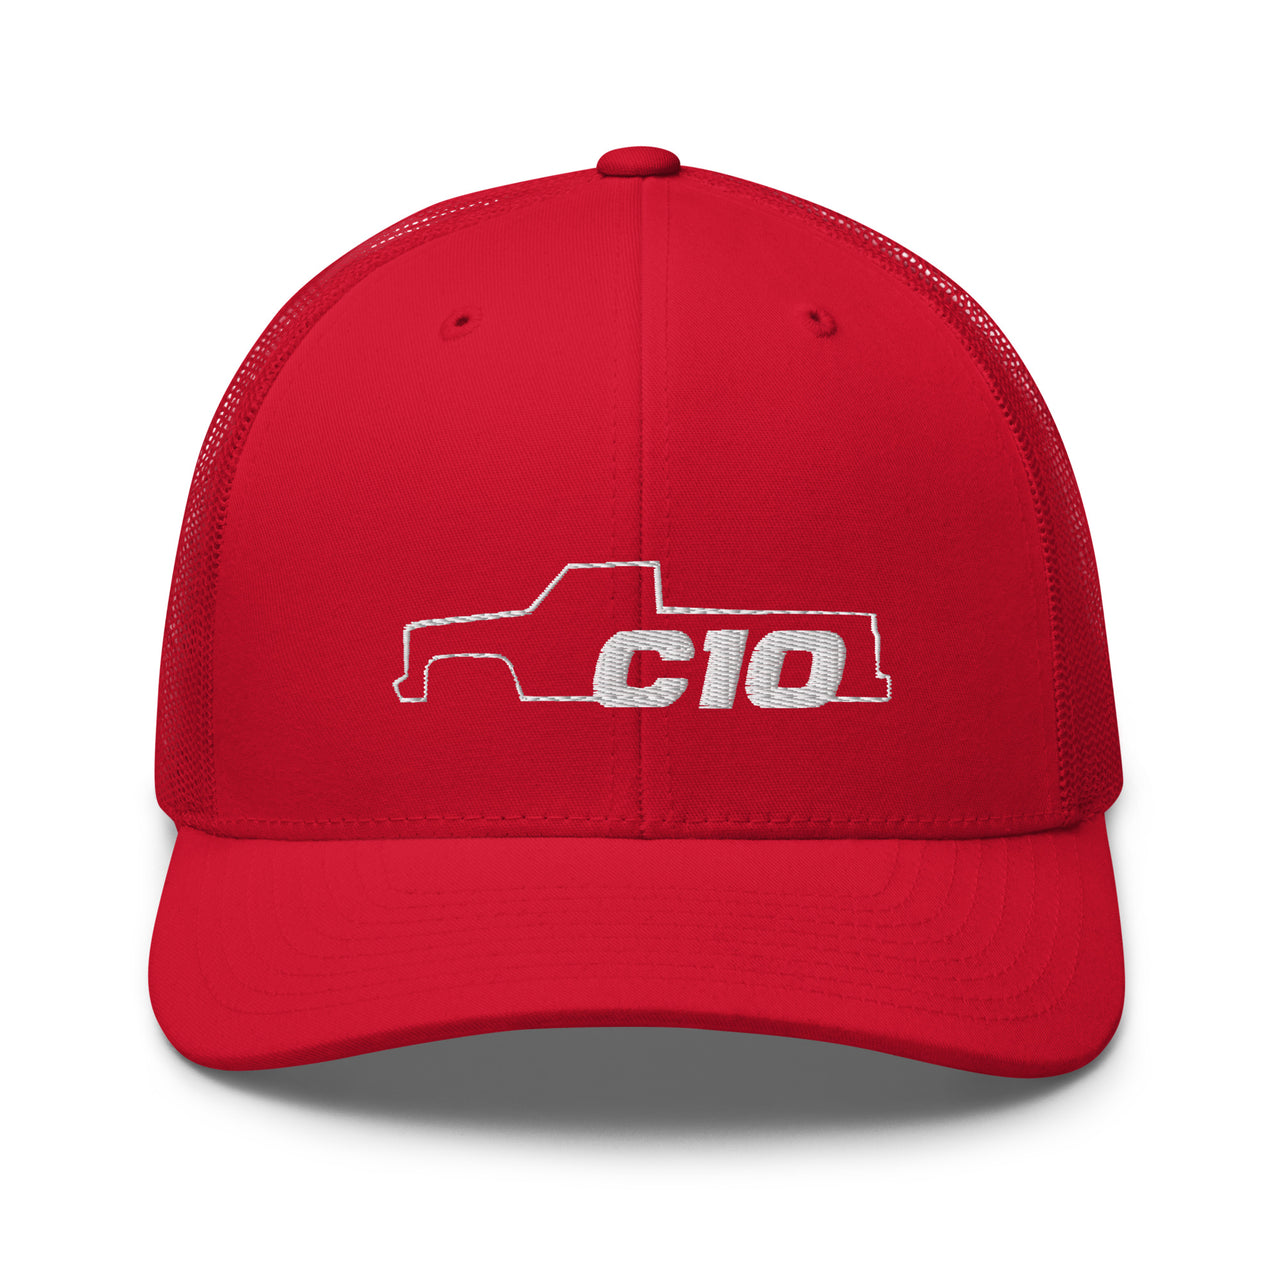 C10 Trucker hat in red